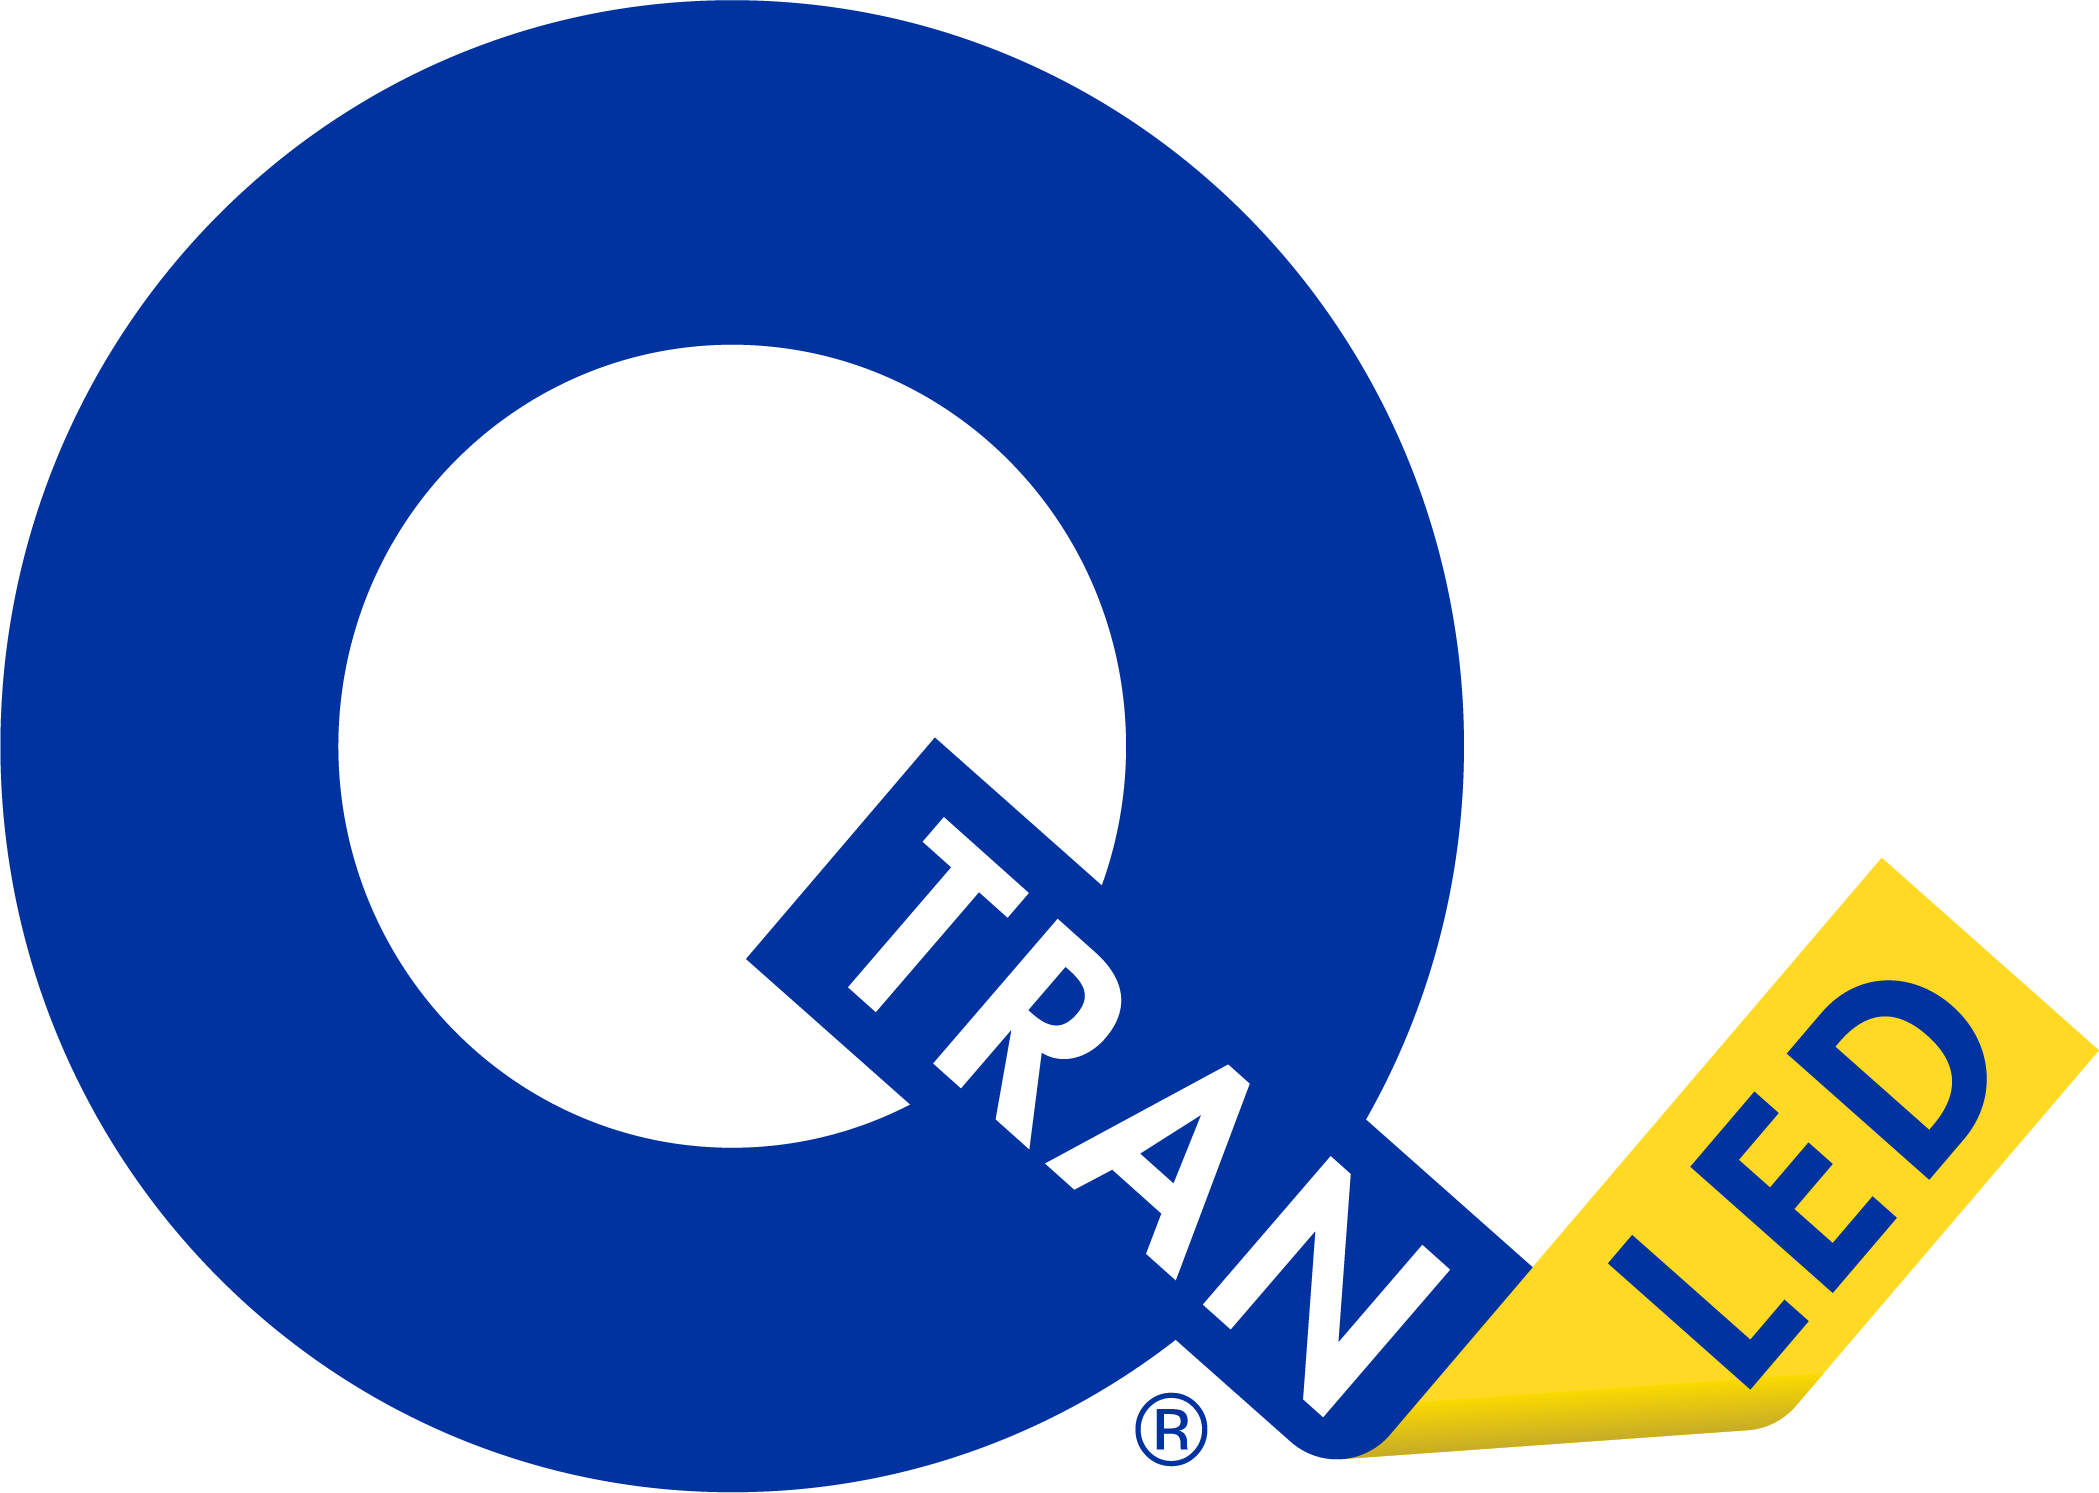 Q-Tran LED logo